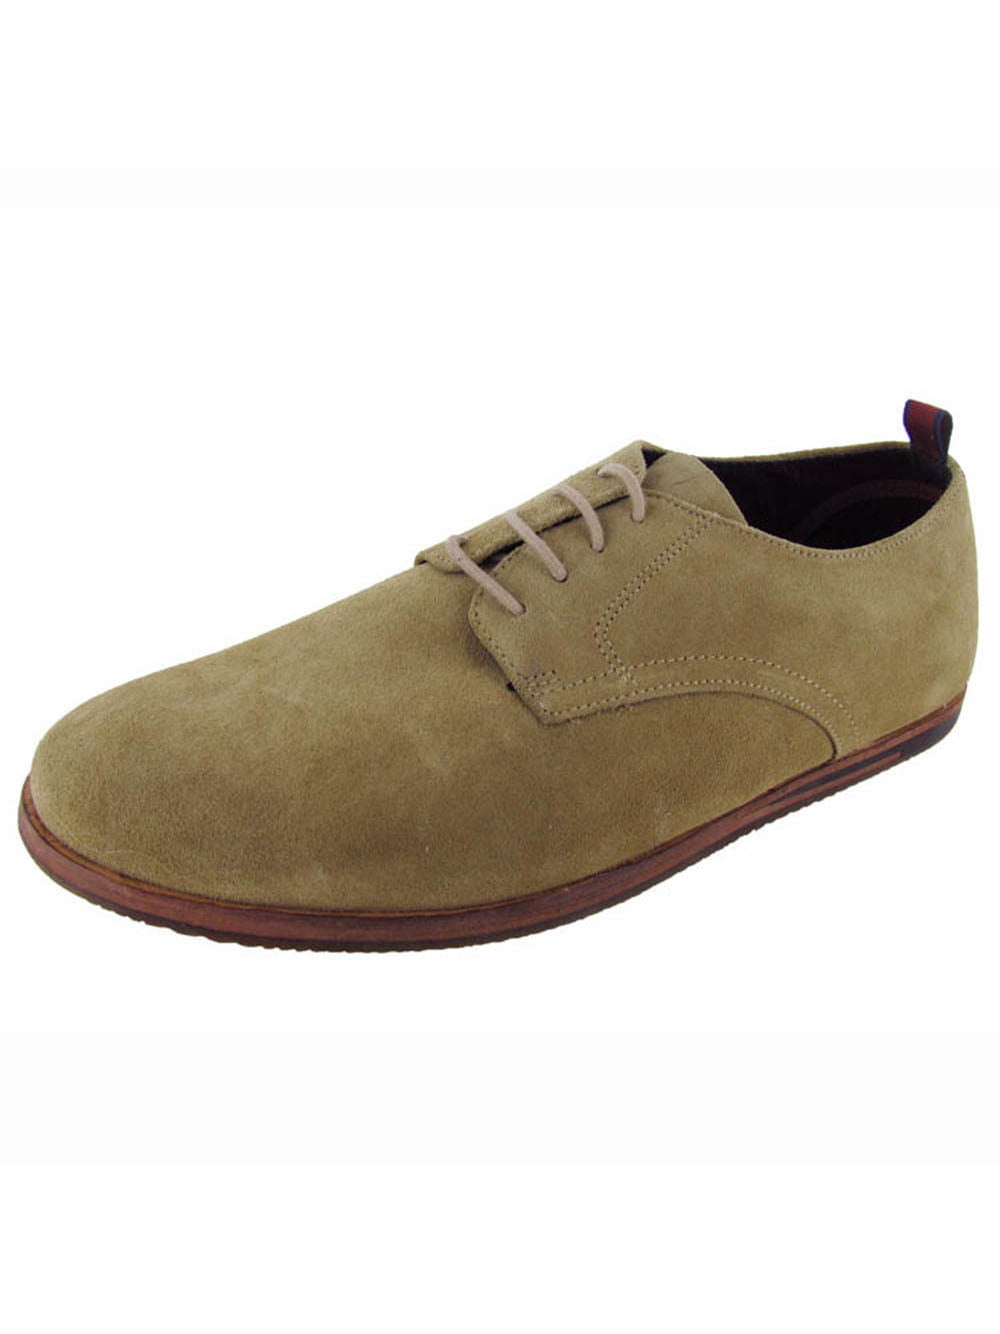 Ben Sherman - Ben Sherman Mens 'Martin' Oxford Shoe, Sand, US 13-13.5 ...